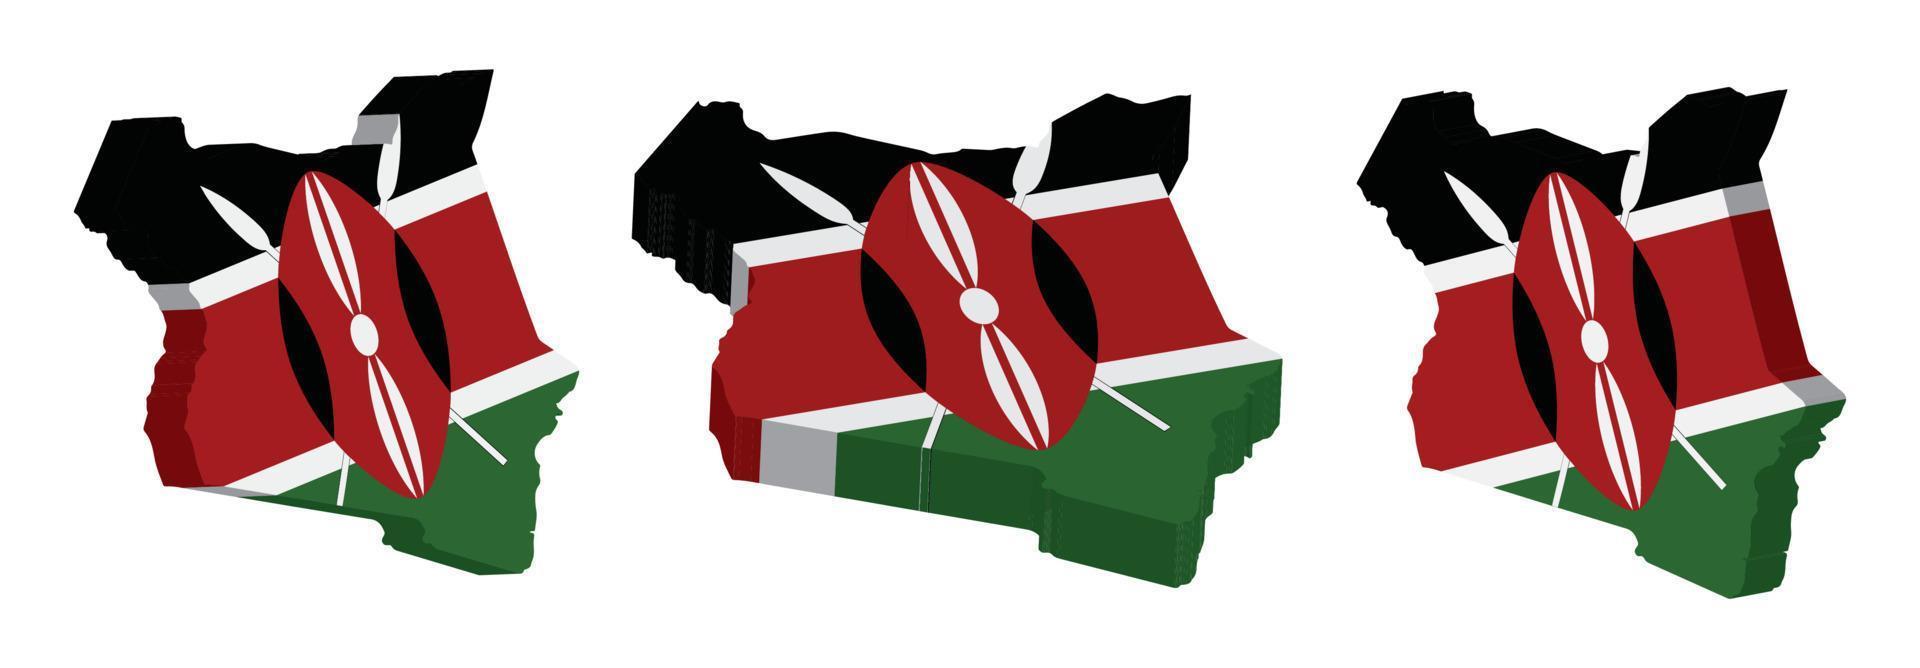 realista 3d mapa do Quênia vetor Projeto modelo